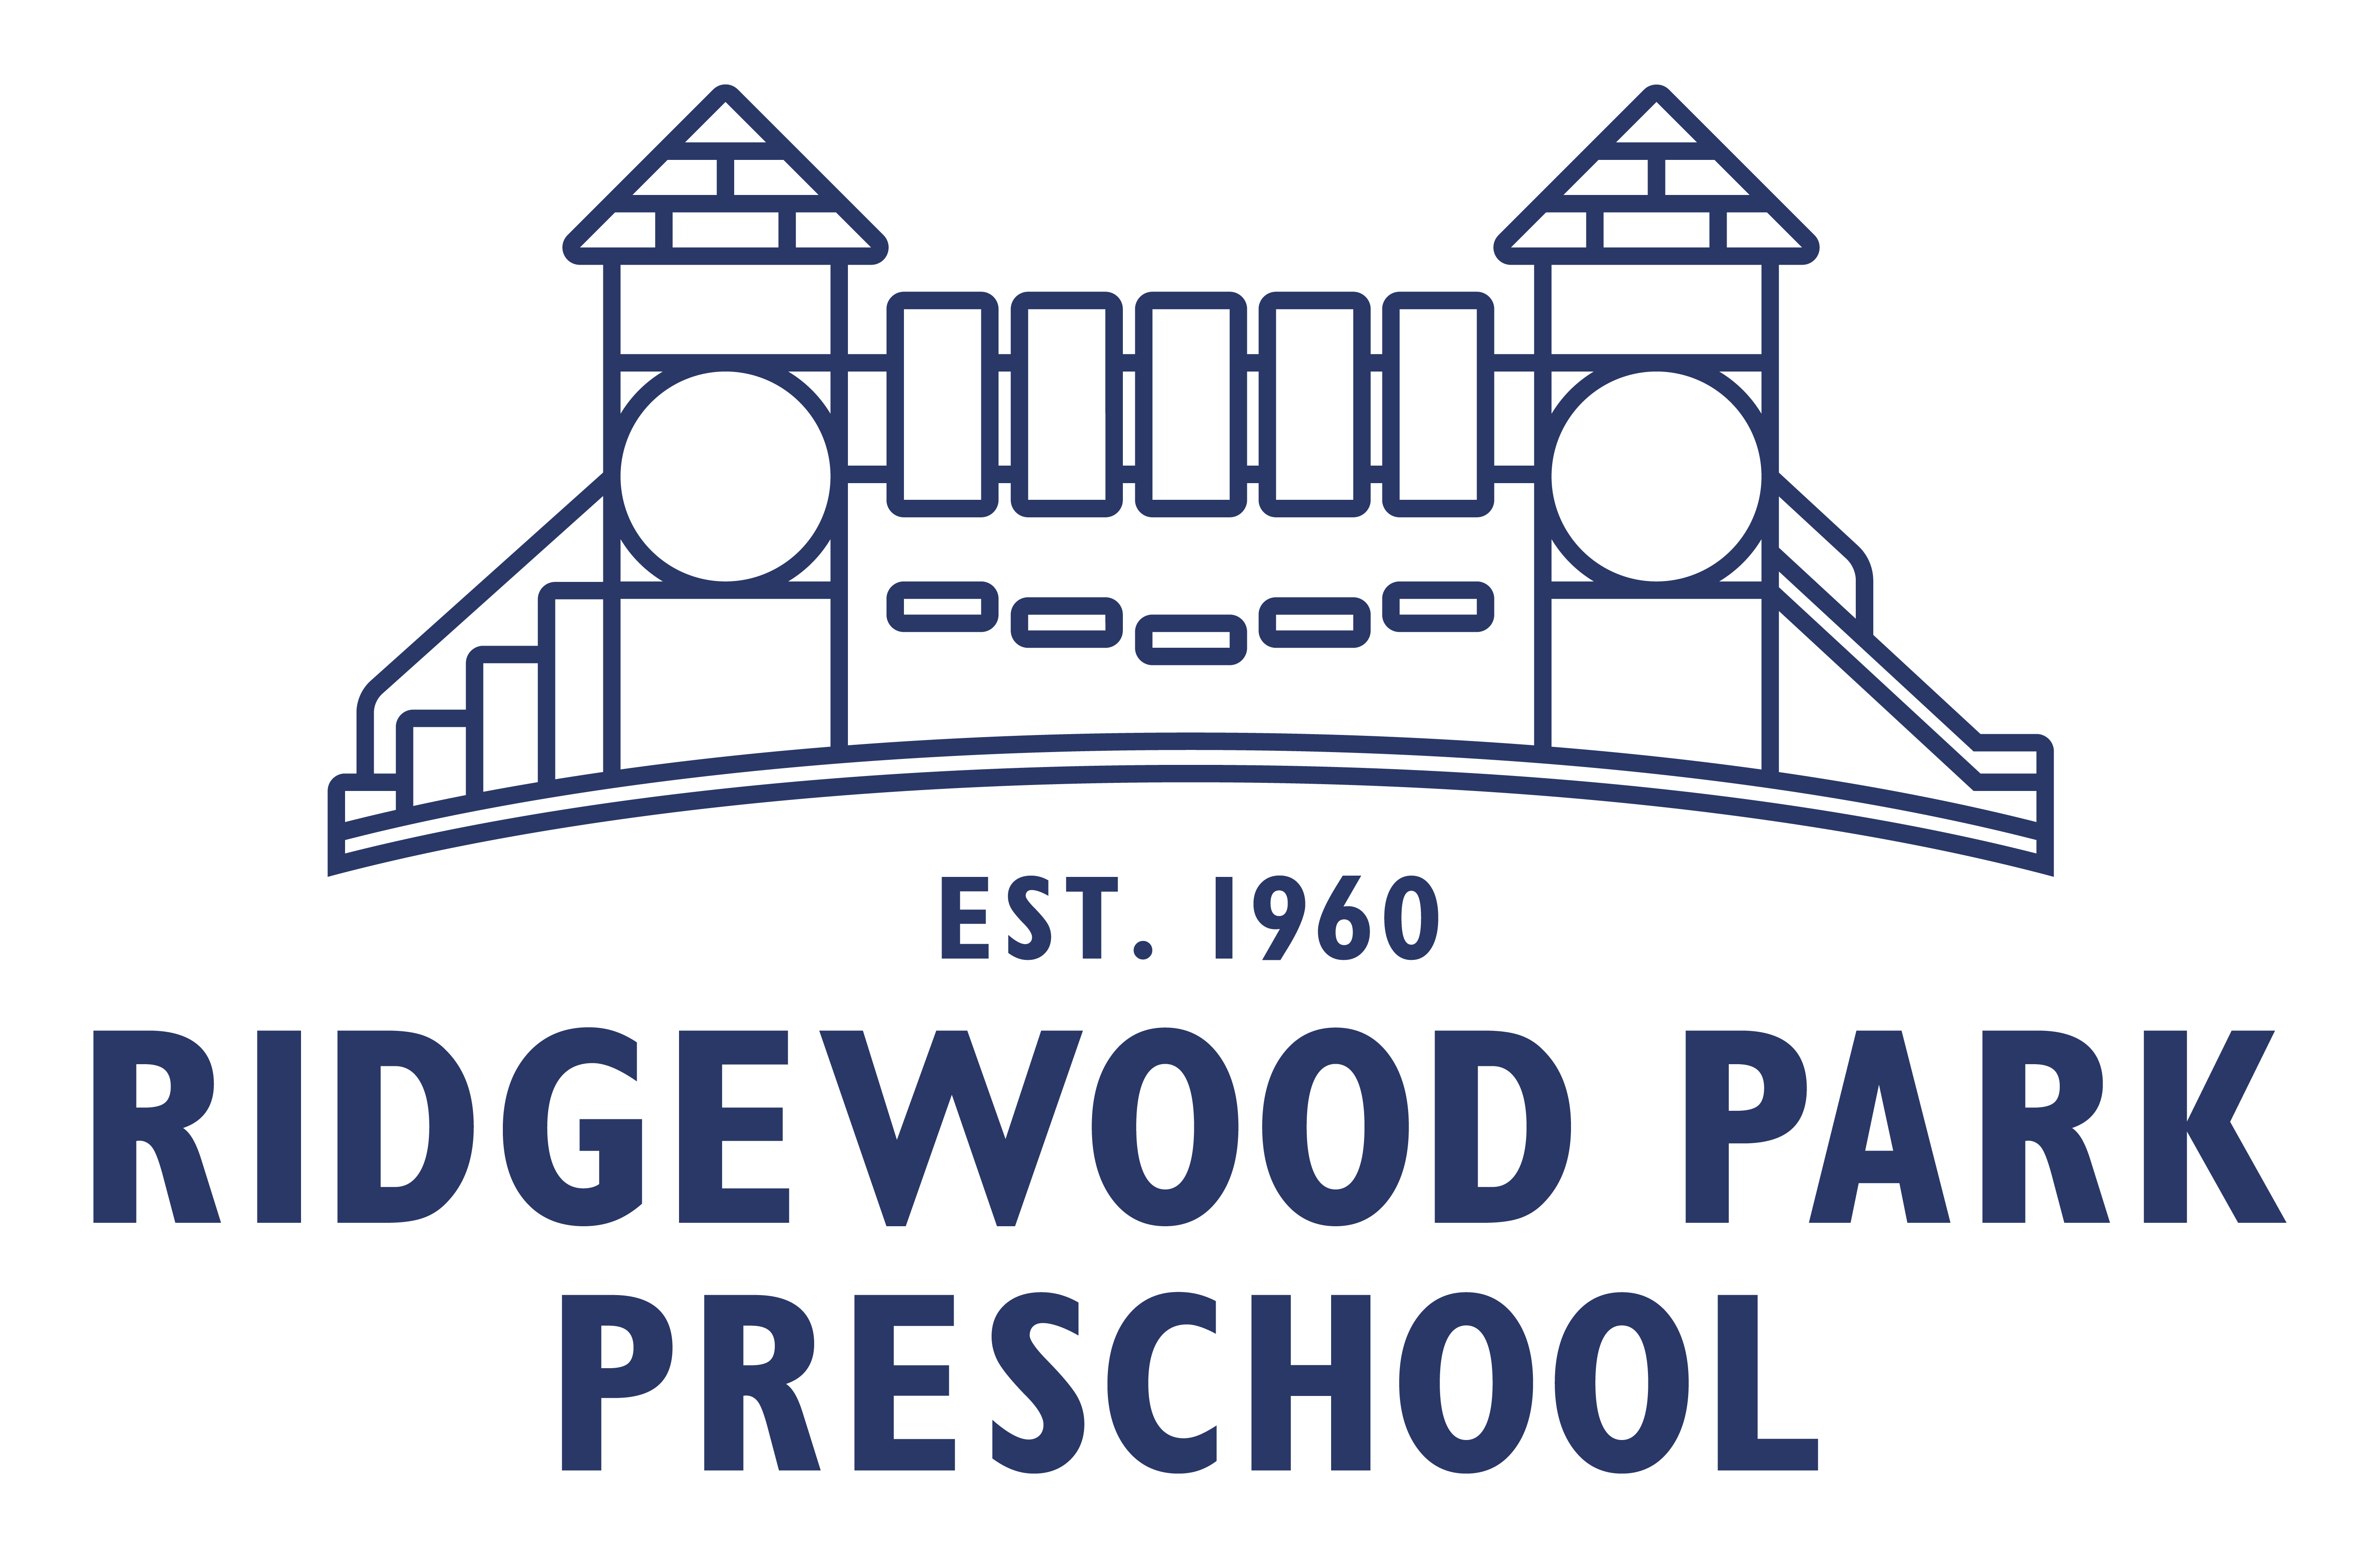 Ridgewood Park Church Preschool